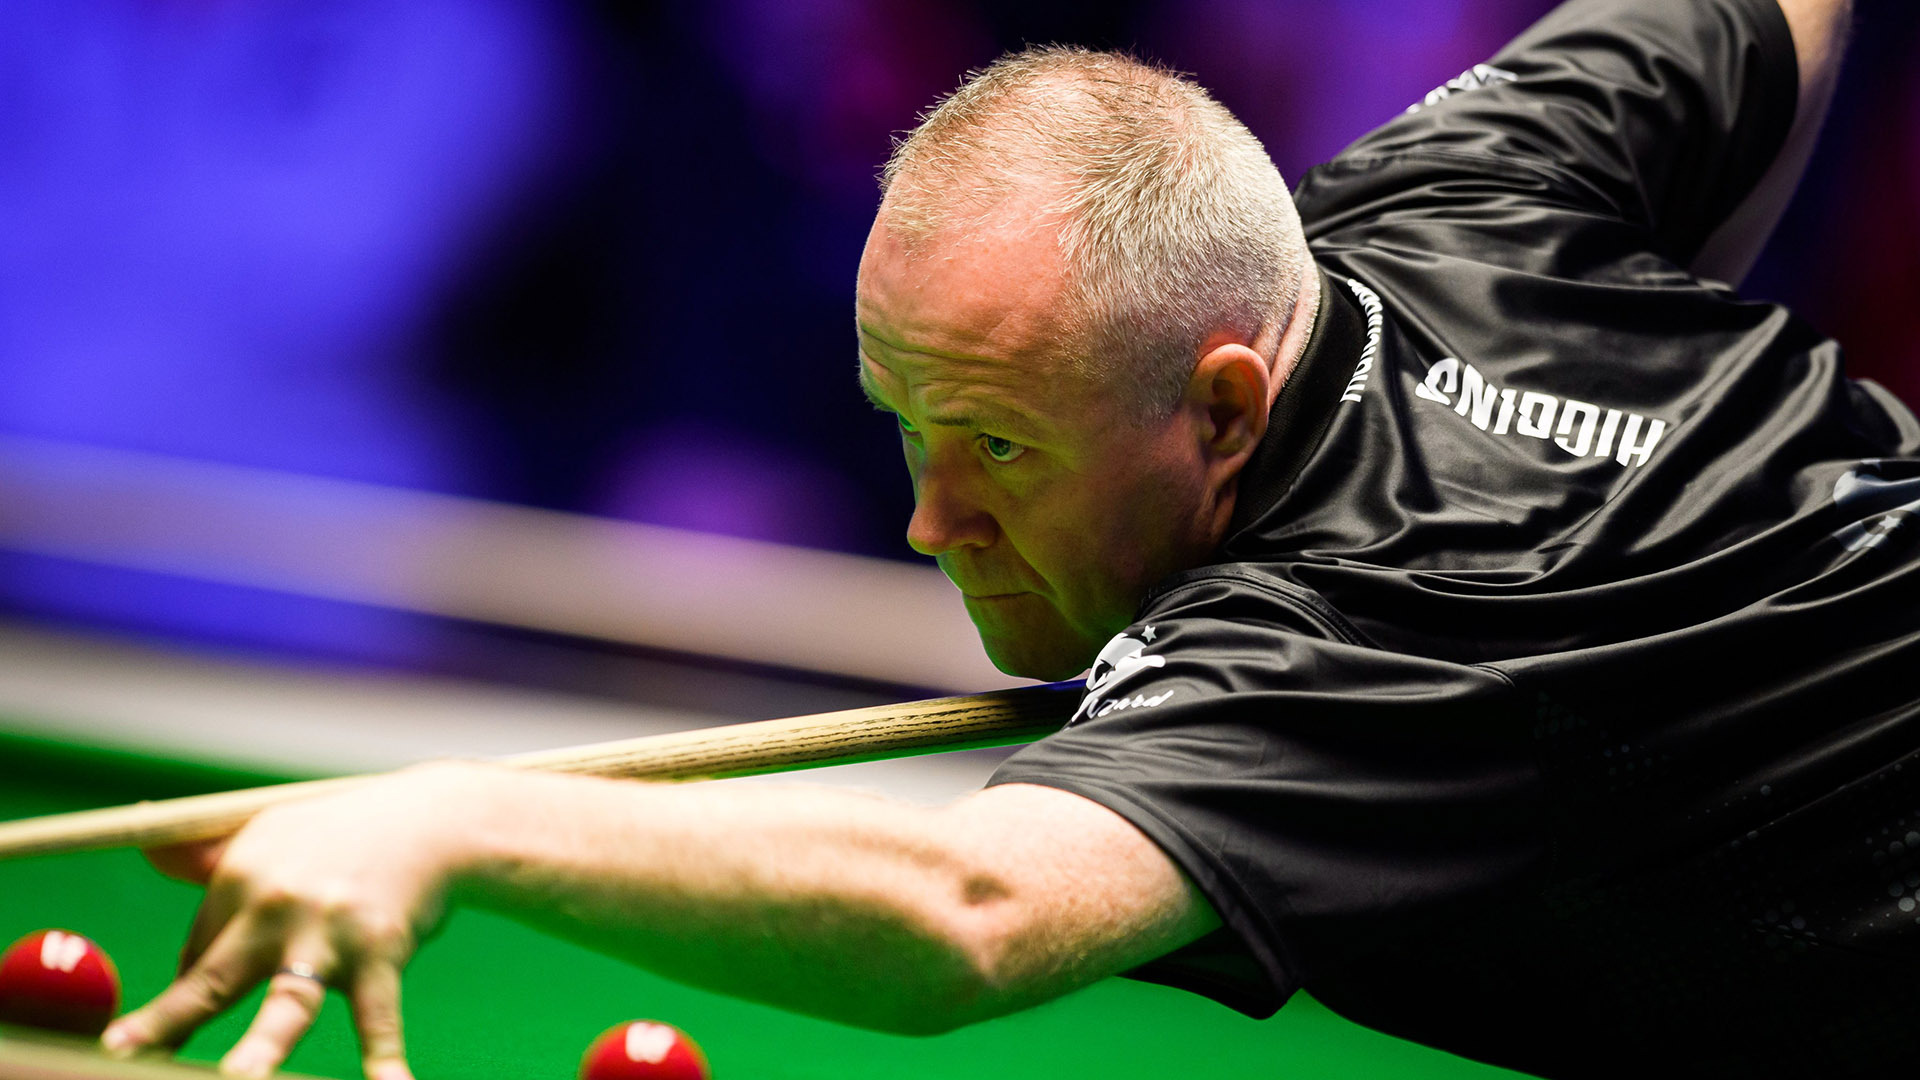 Snooker results John Higgins beats Ronnie OSullivan to reach Champion of Champions semi-finals